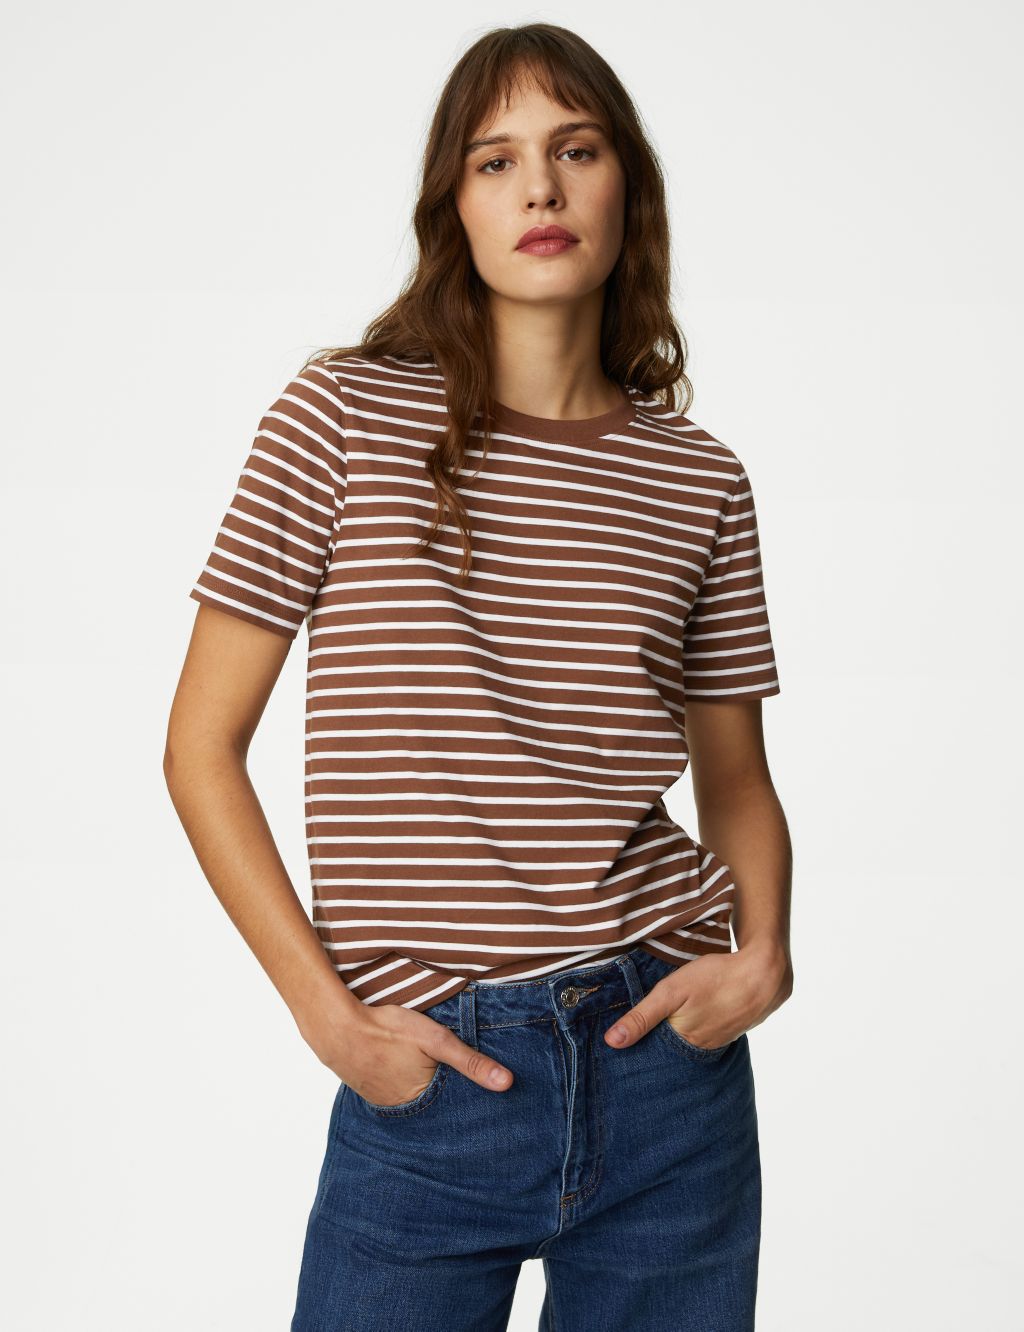 Women's Striped Shirts & Blouses